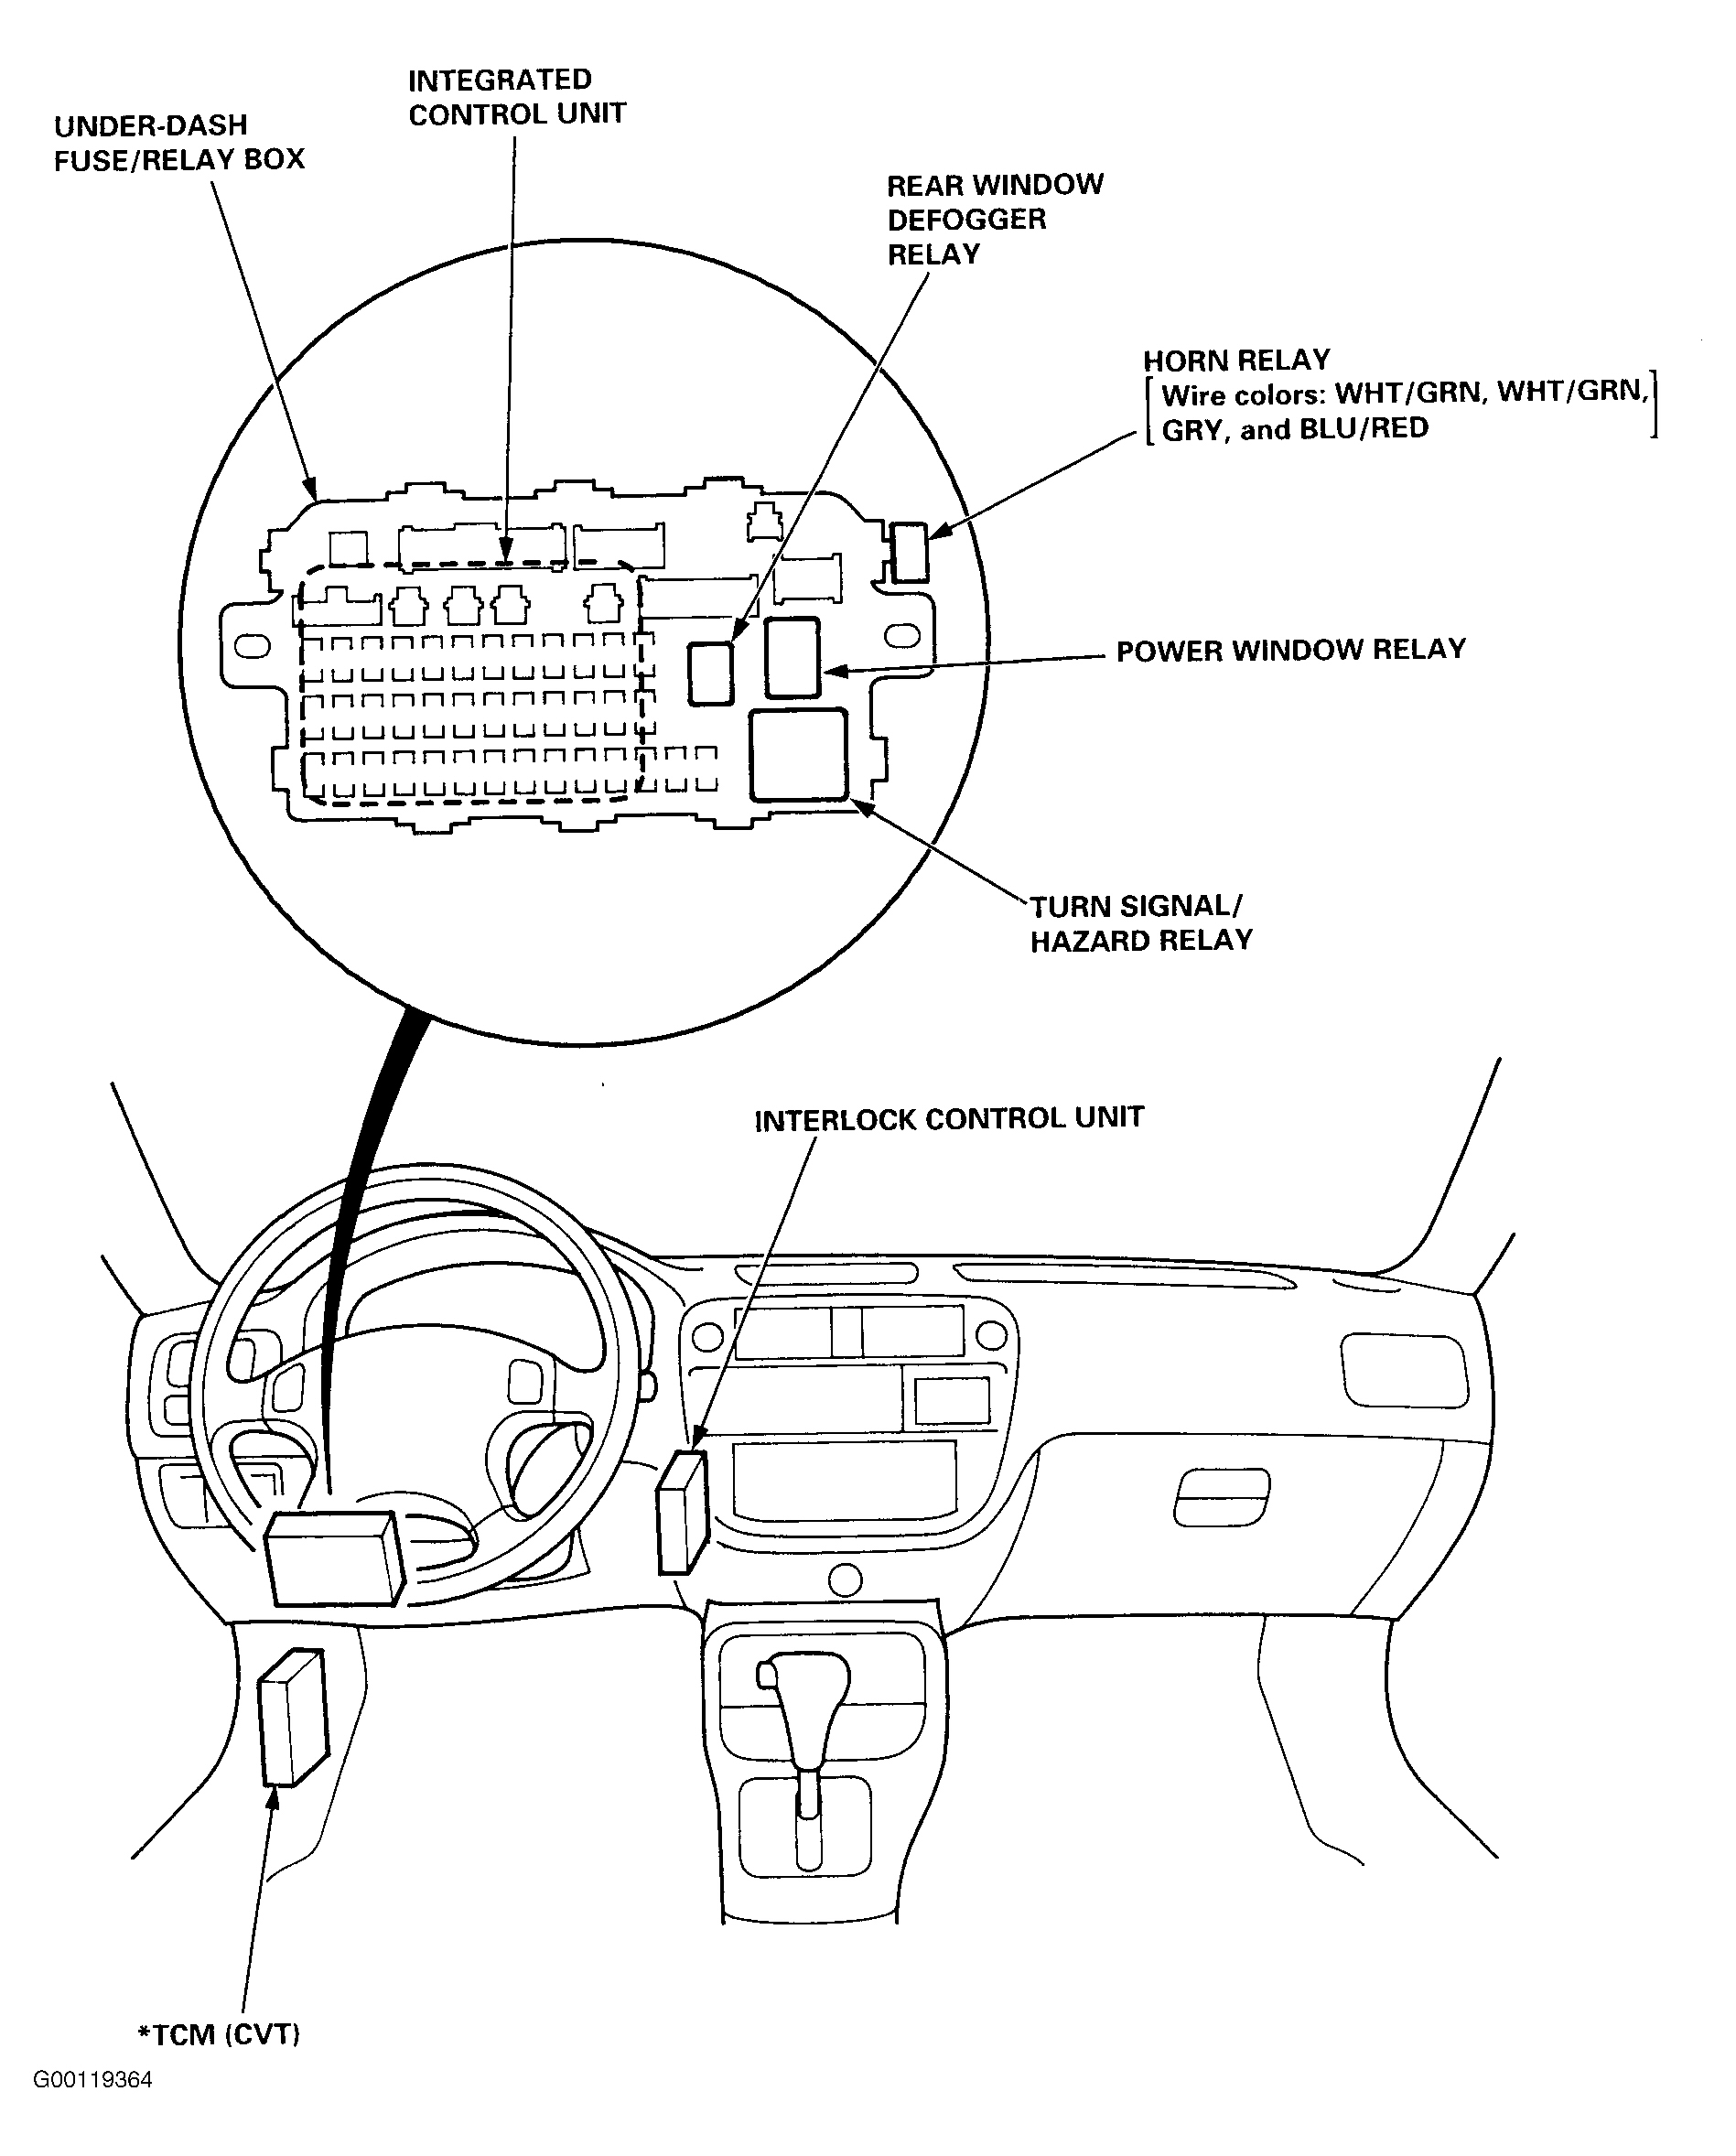 Honda Civic DX 1999 - Component Locations -  Locating Under-Dash Fuse/Relay Box (1996-97)